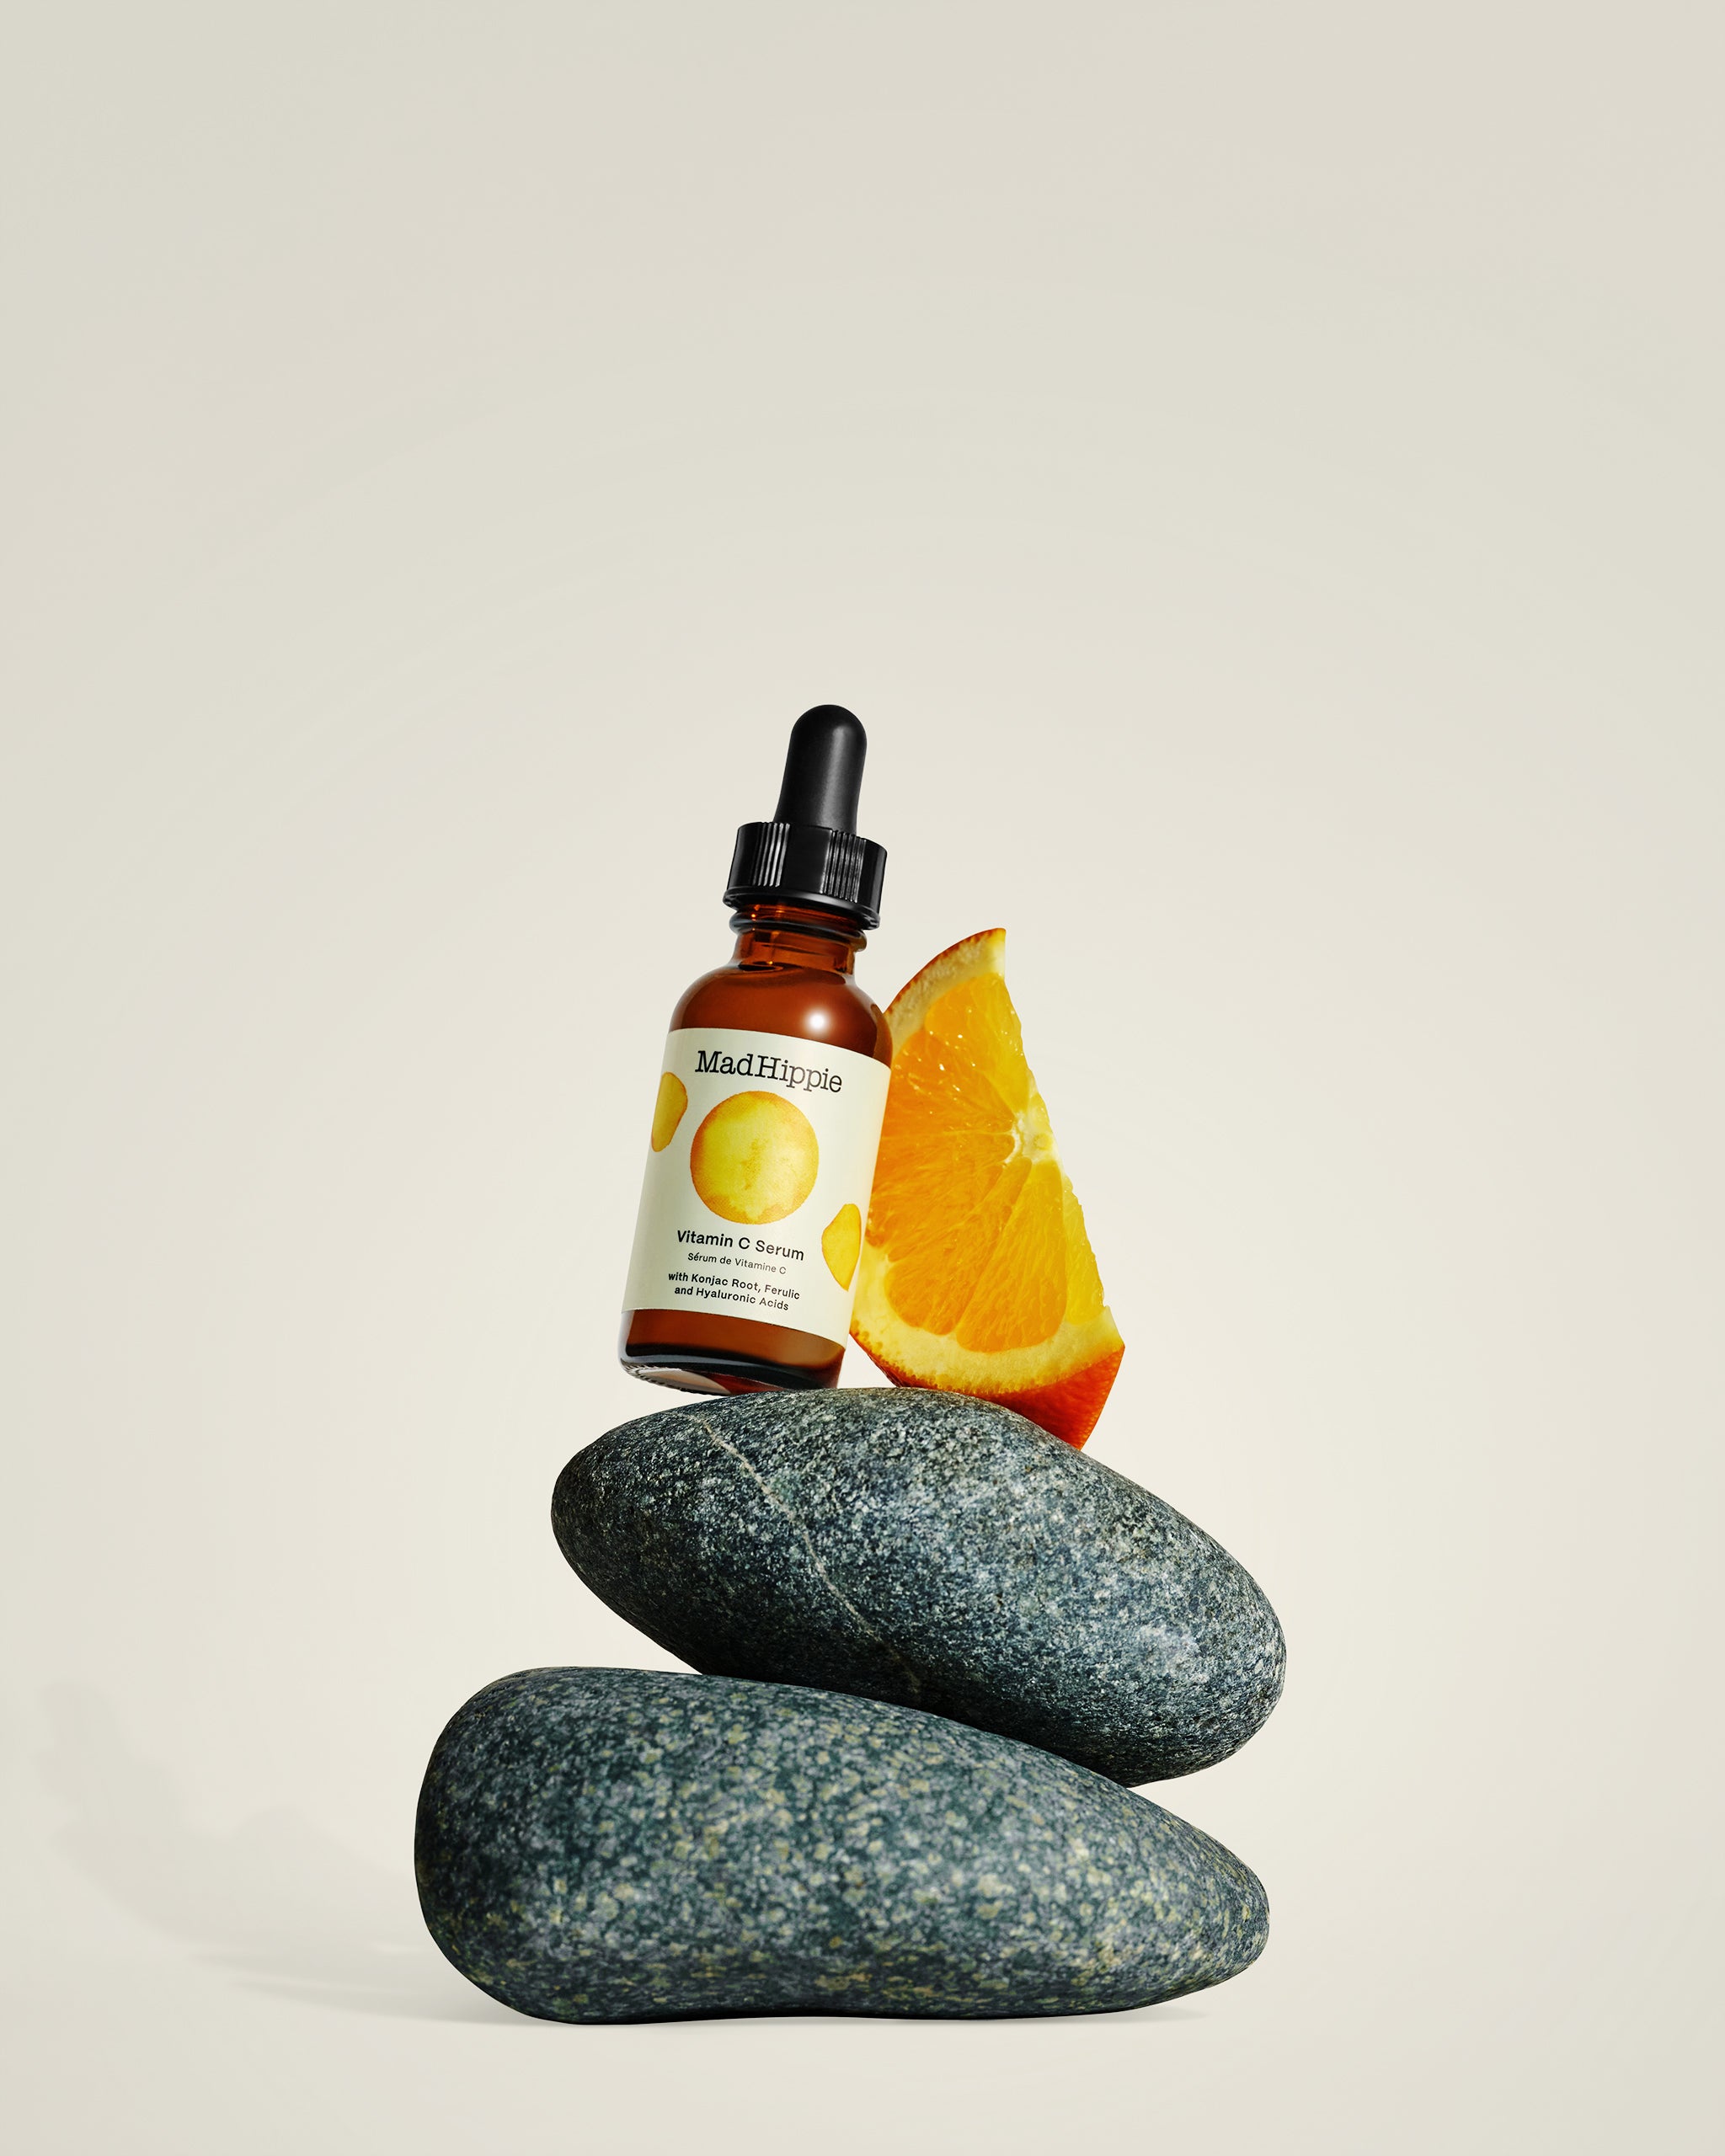 Vitamin C Serum bottle + orange wedge sitting on two granite rocks, with gray background